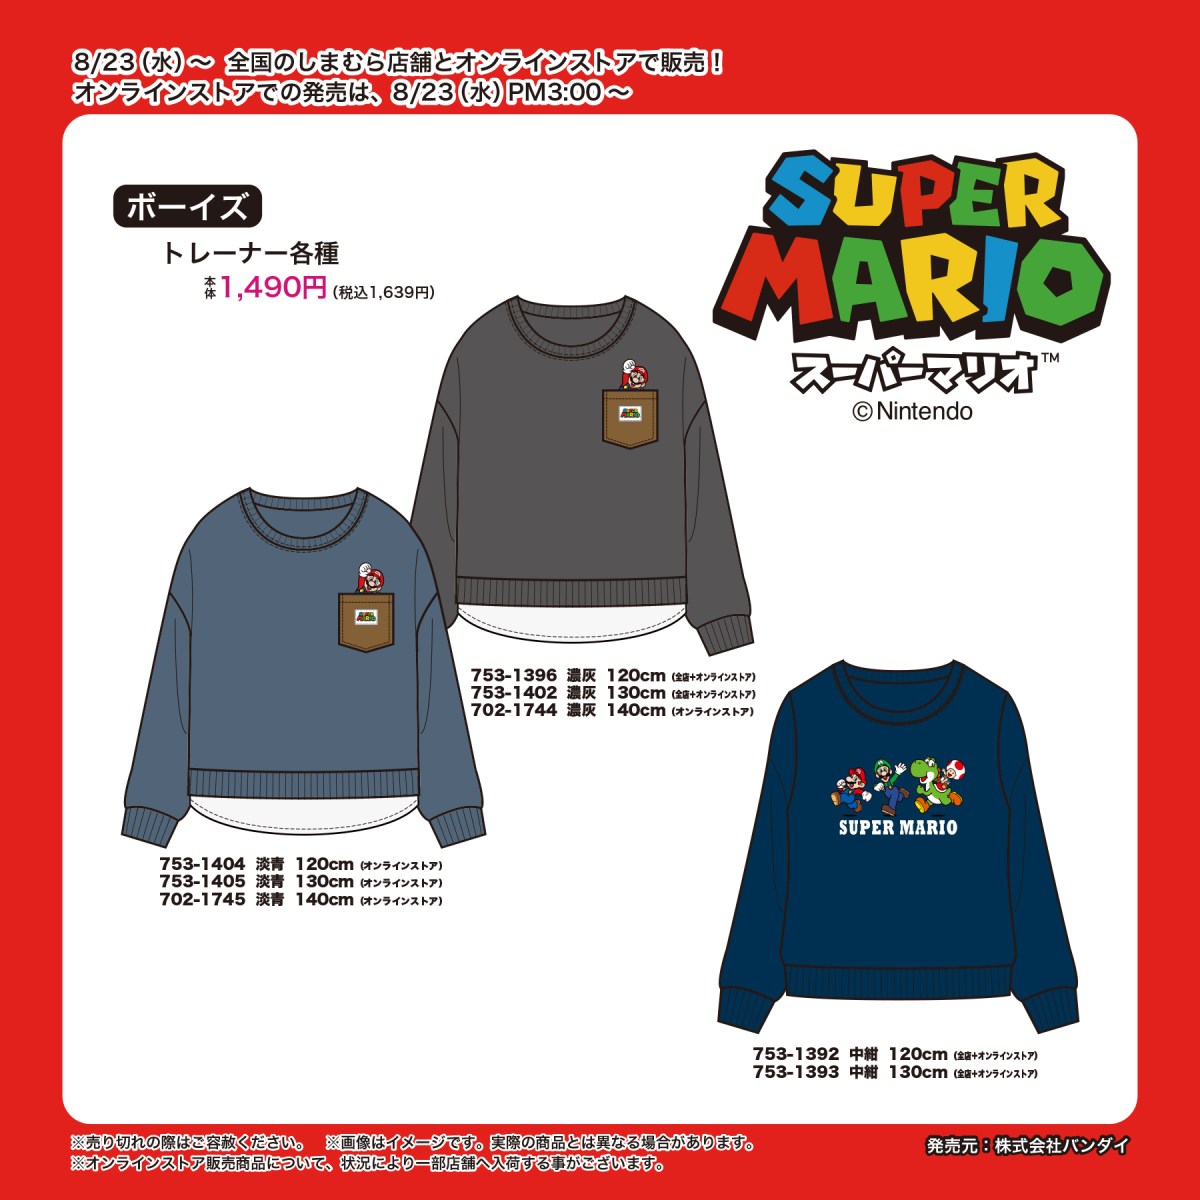 New Mario Sweatshirts and Hoodies Available at Shimamura